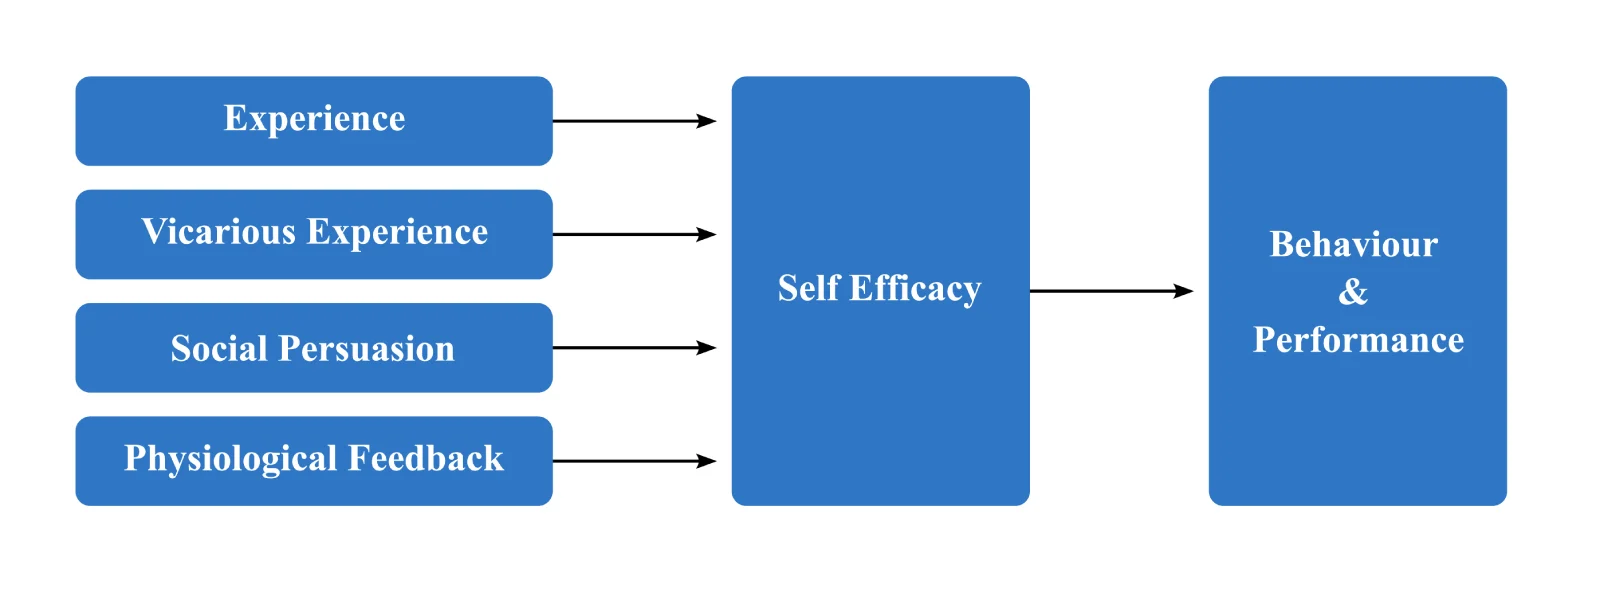 Bandura’s Self-Efficacy Theory Of Motivation